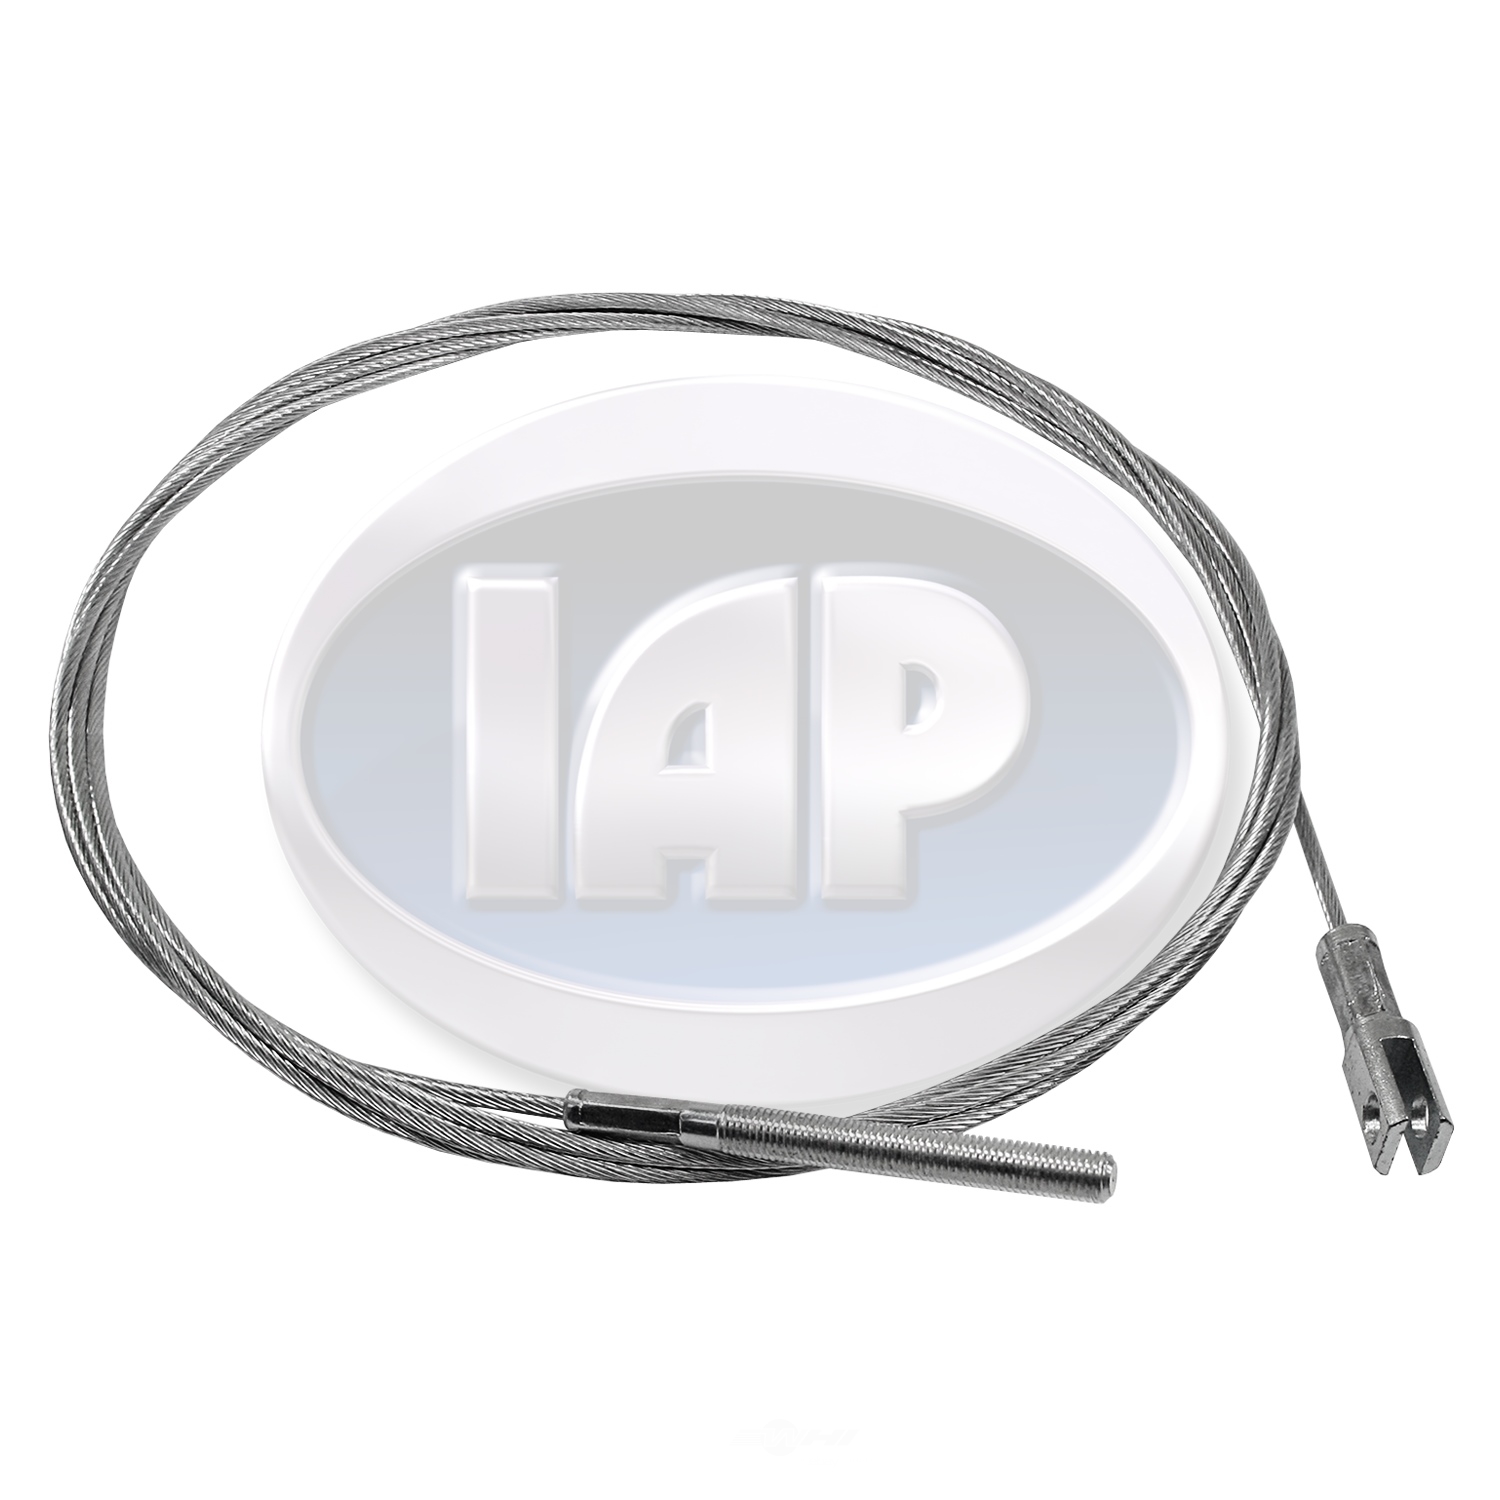 IAP/KUHLTEK MOTORWERKS - Clutch Cable - KMS 211721335E